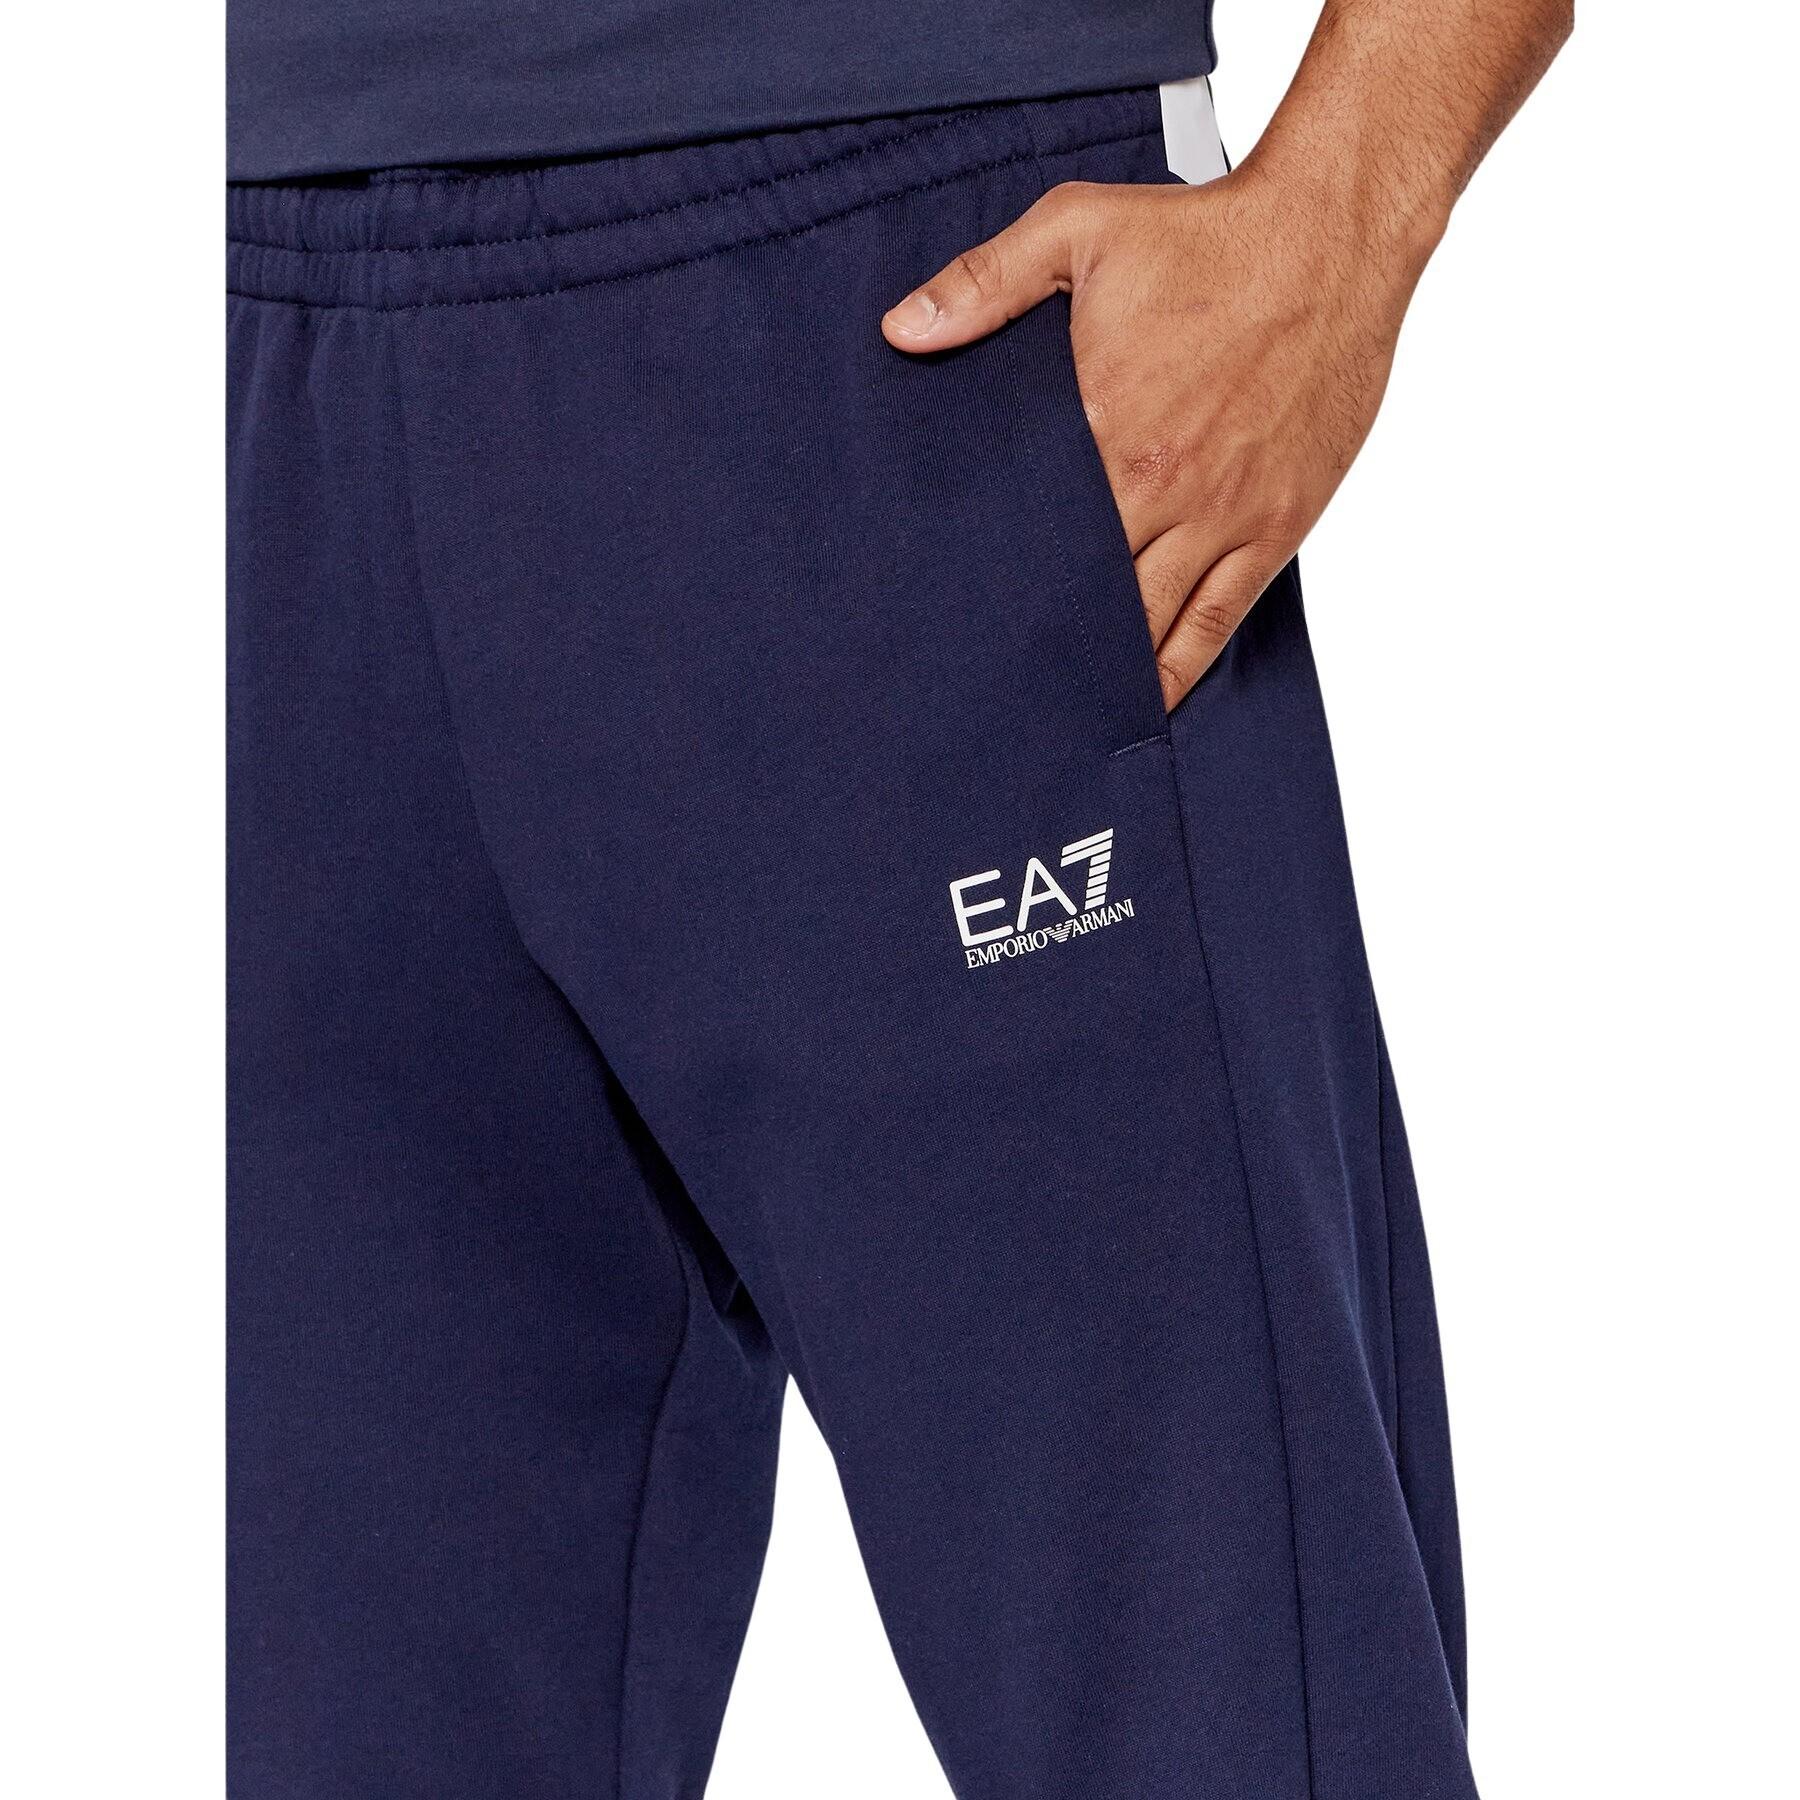 Pantalones EA7 Emporio Armani